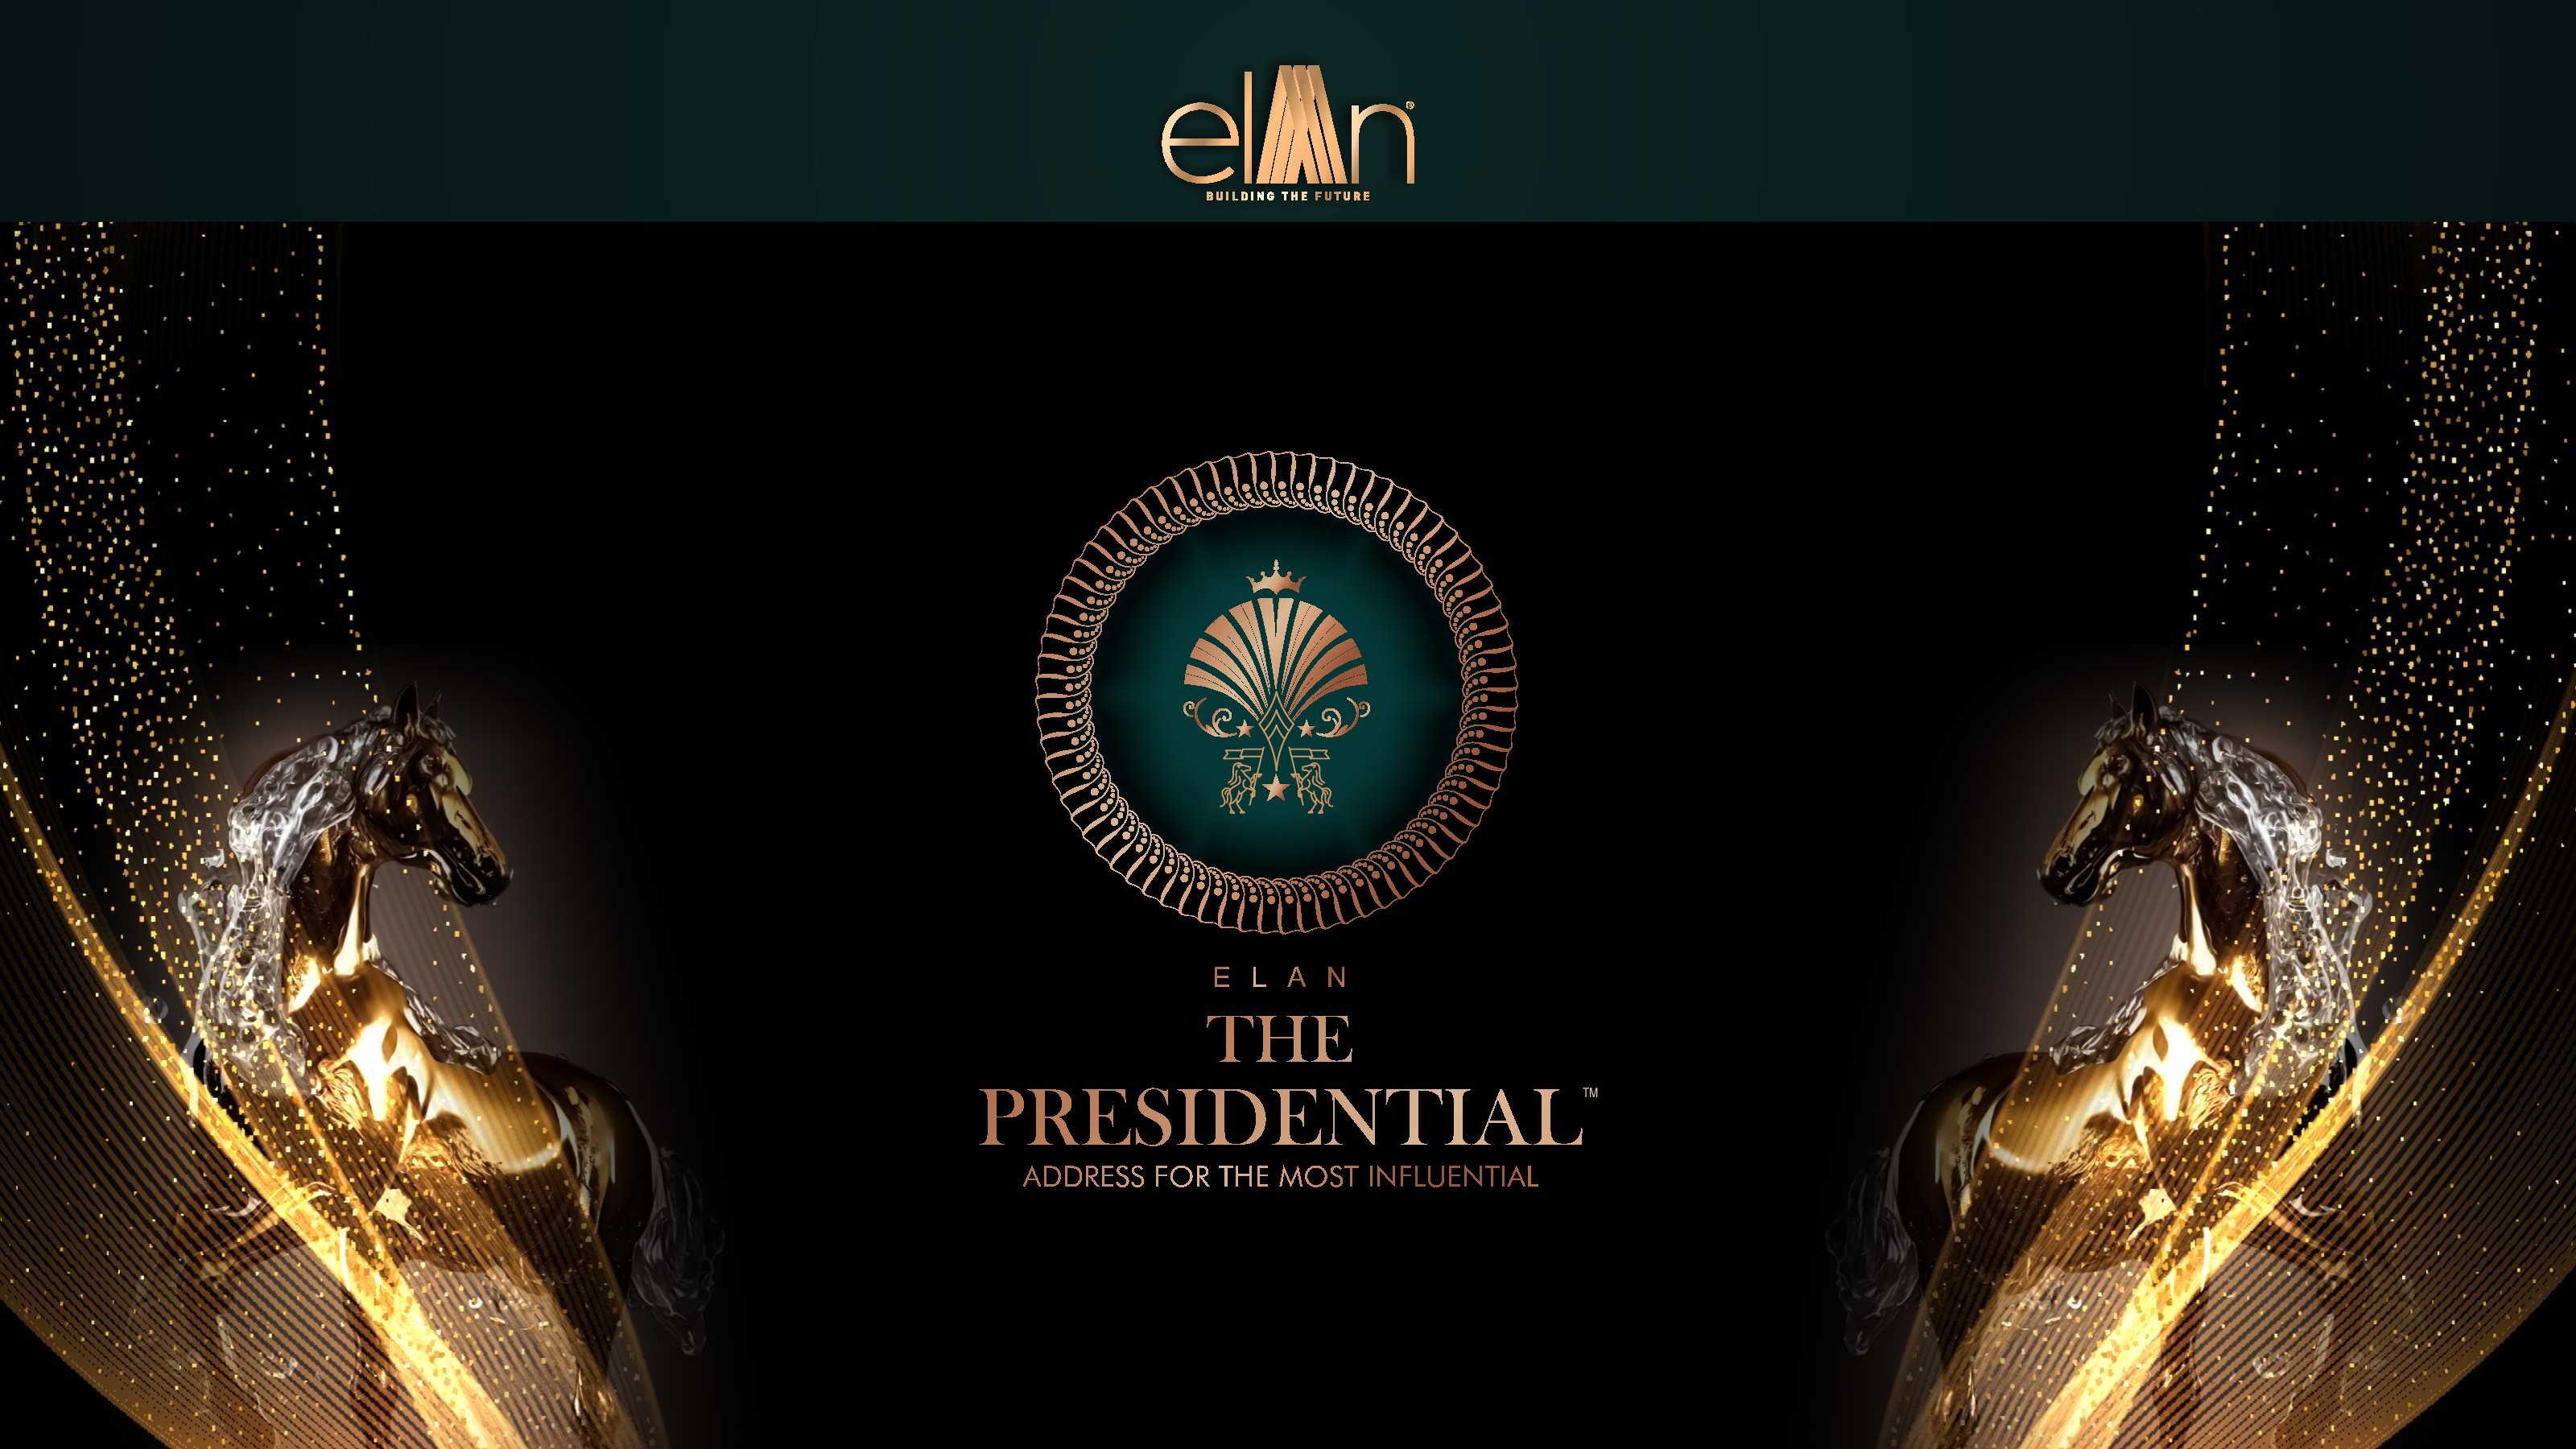 Elan The Presidential